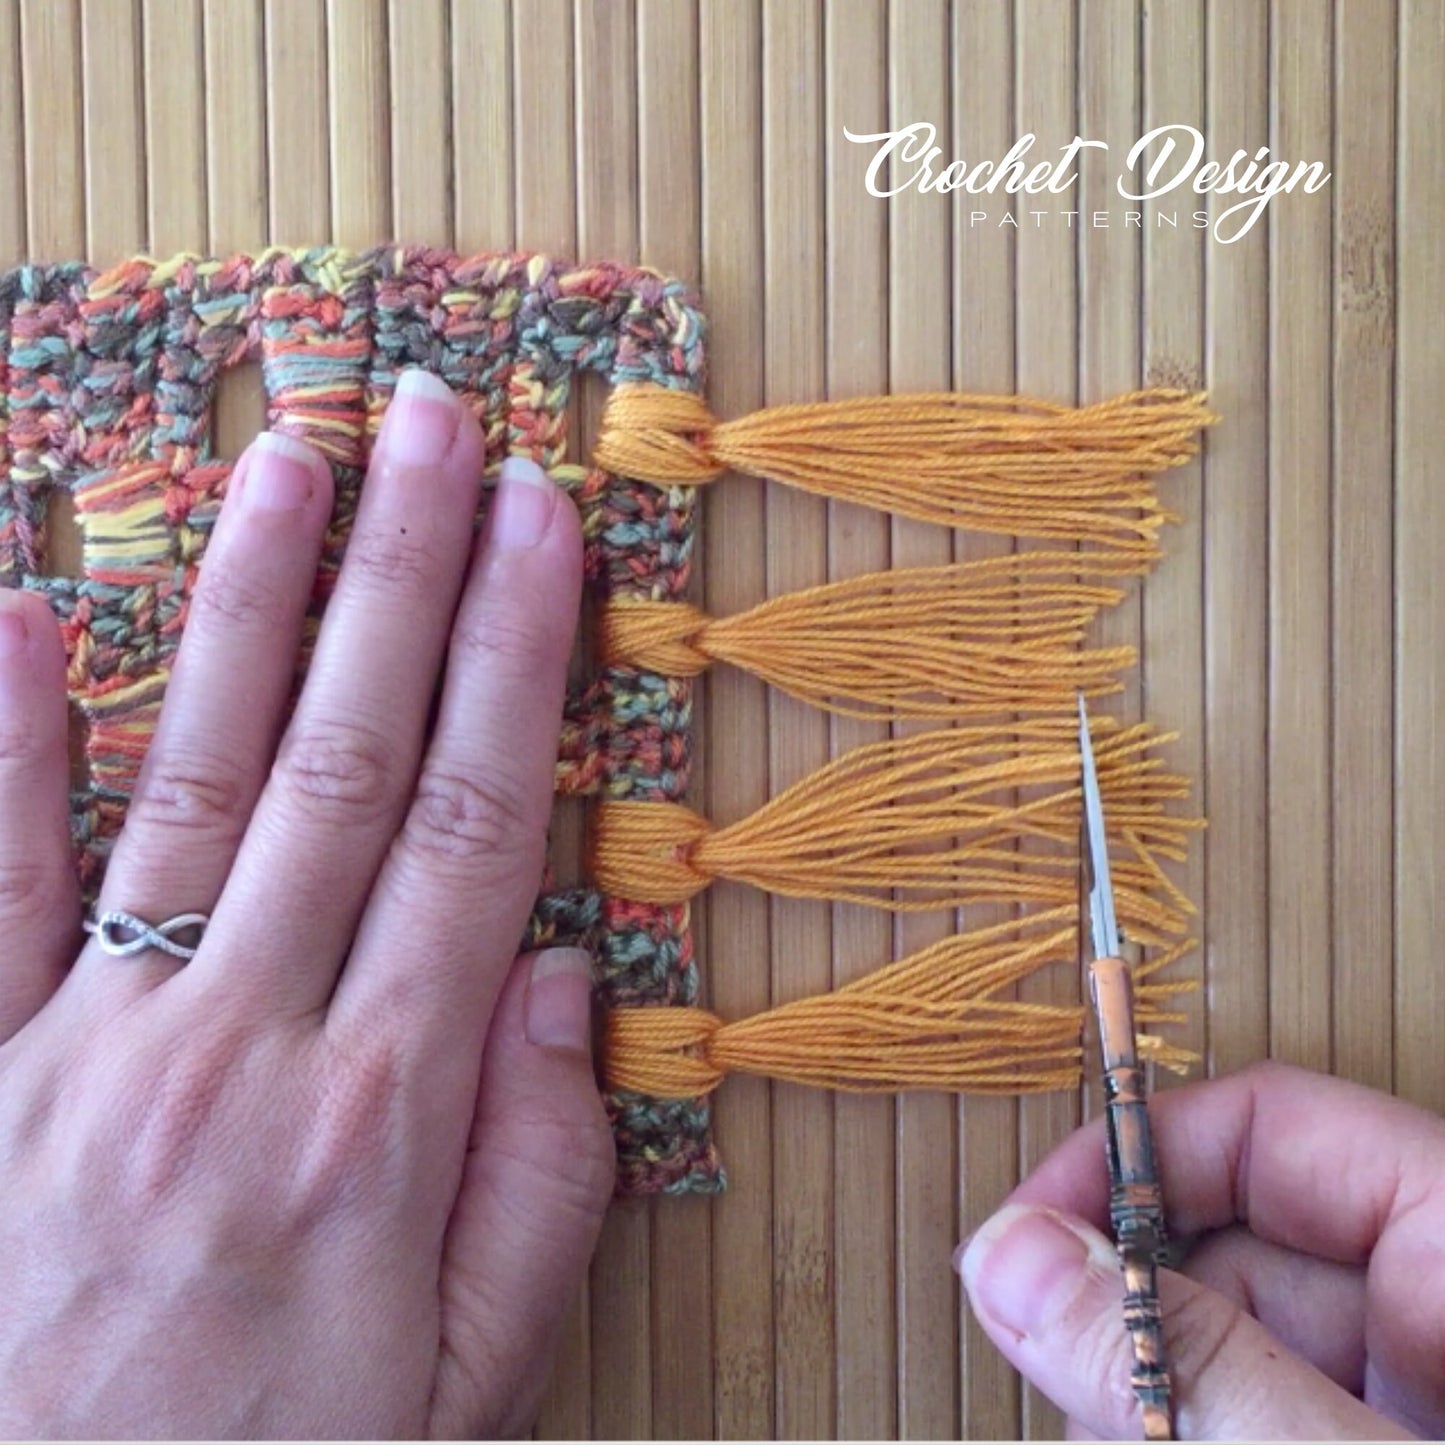 Mug Rug / Coaster with Fringes | Crochet pdf pattern